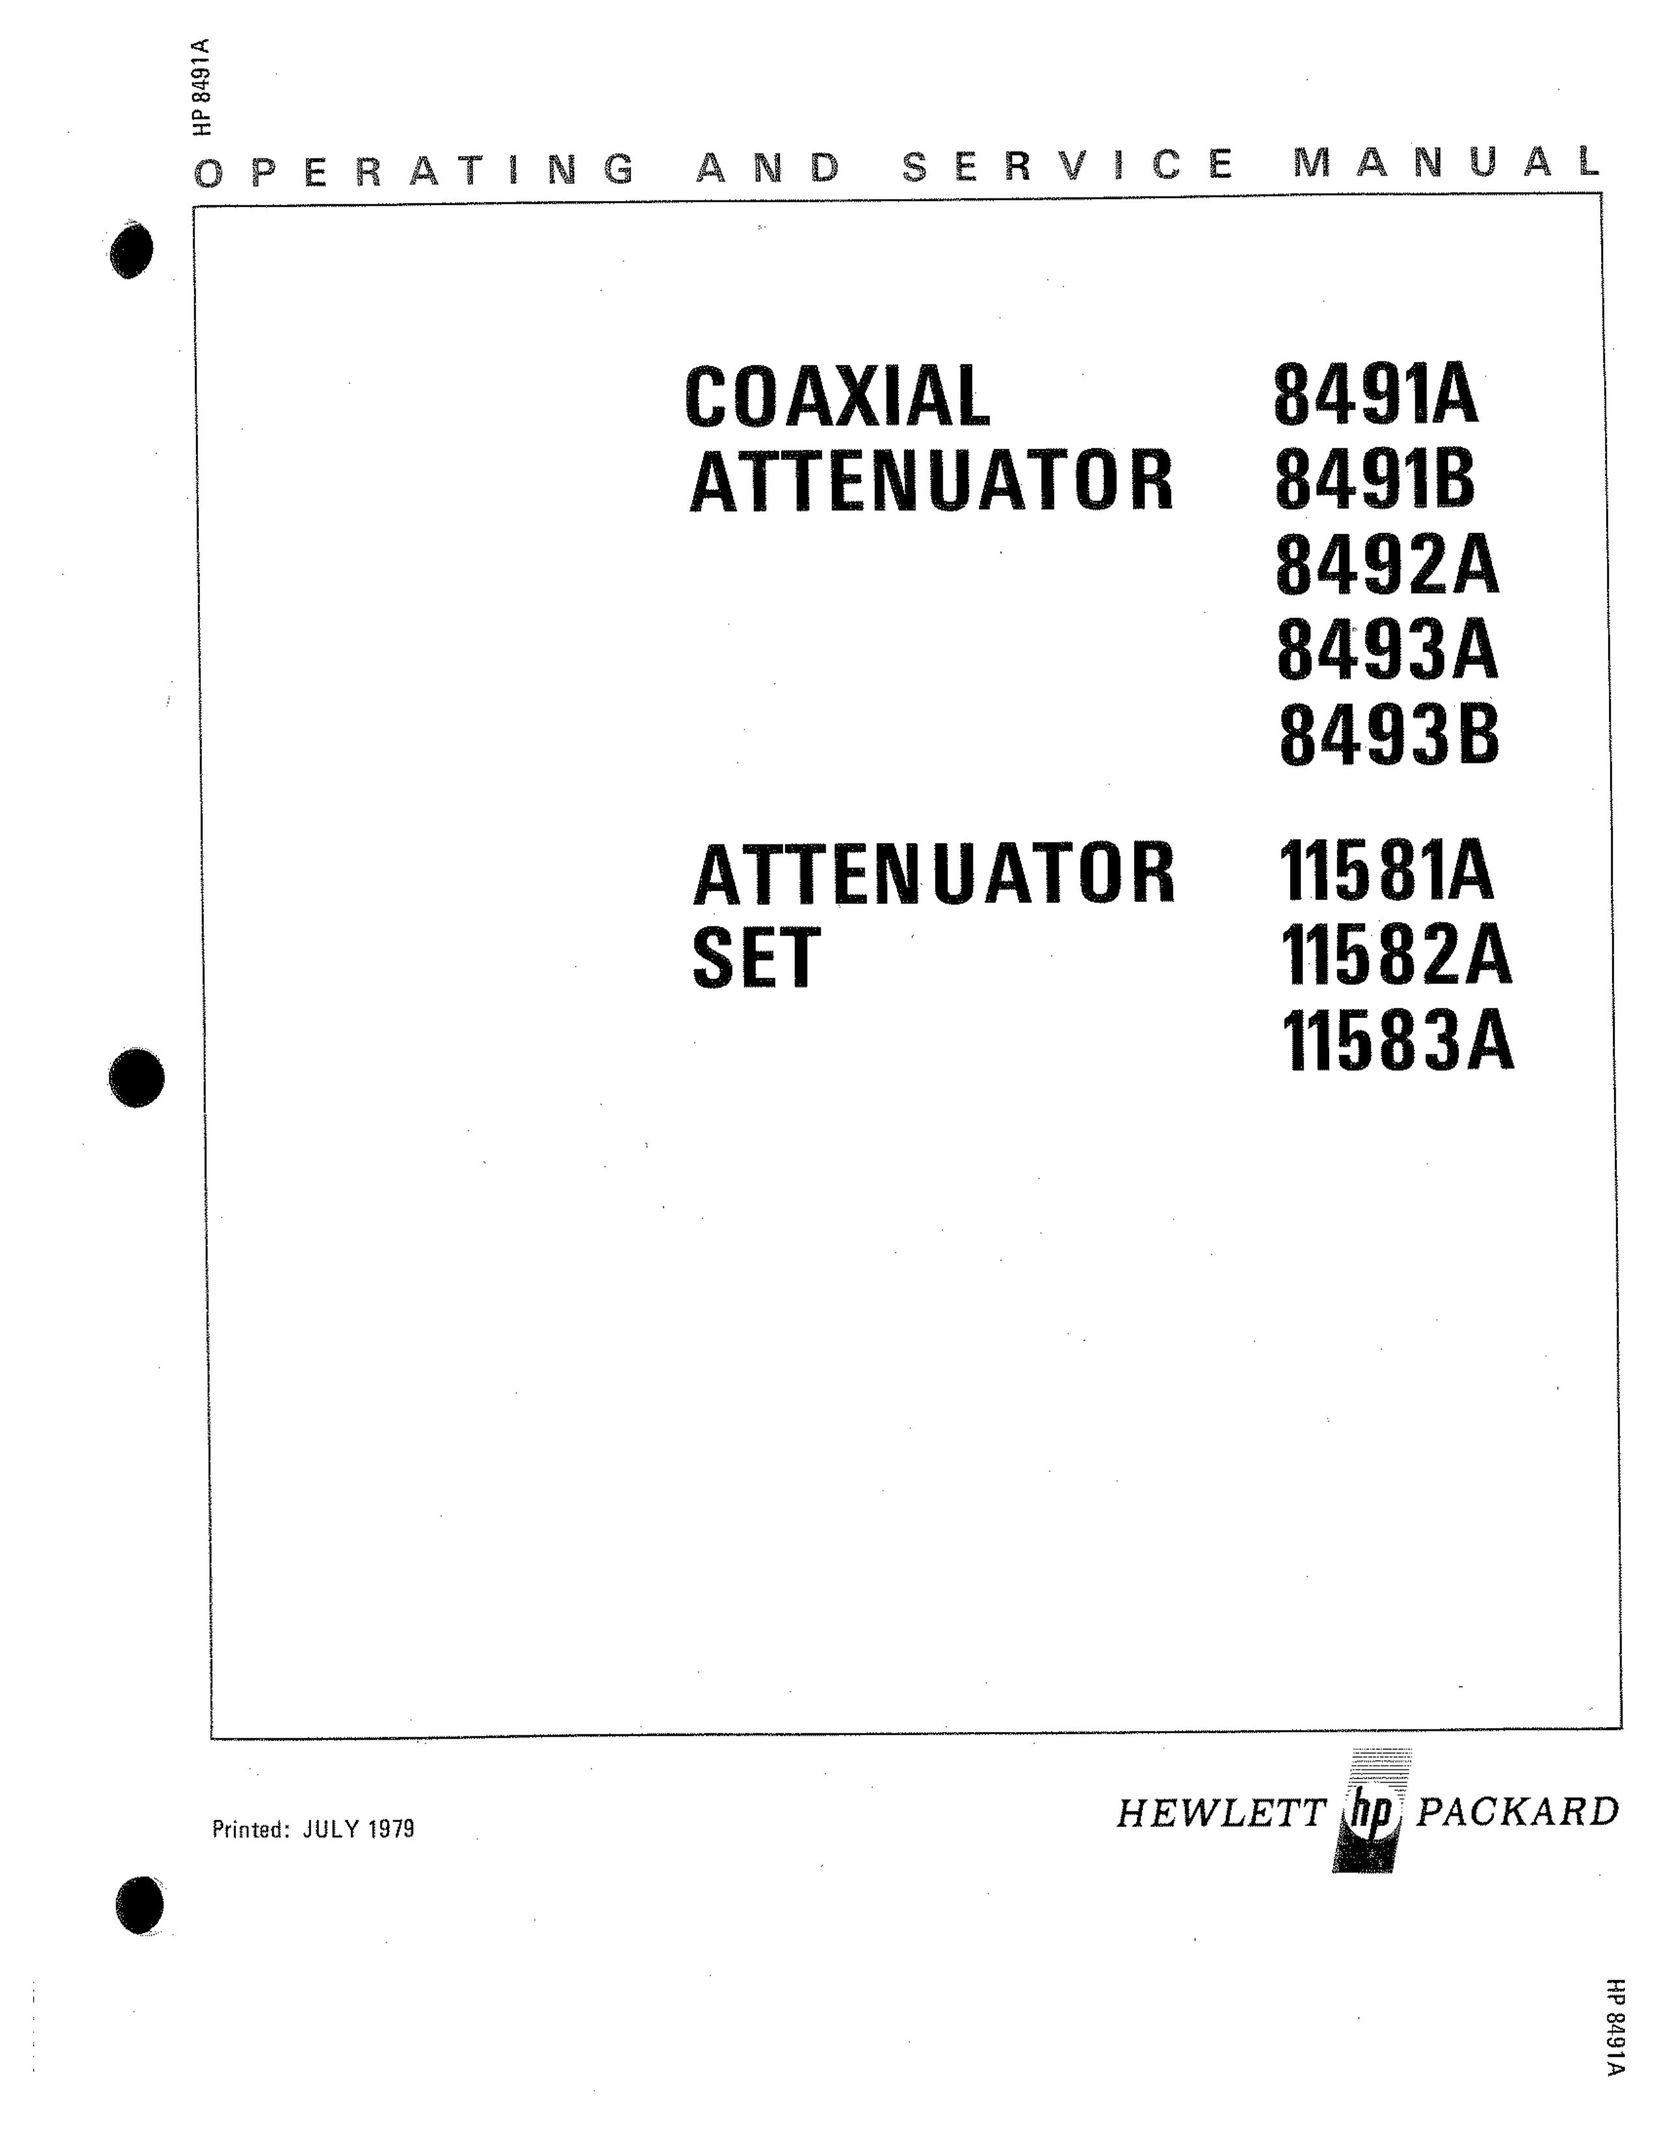 HP (Hewlett-Packard) 8491B TV Cables User Manual